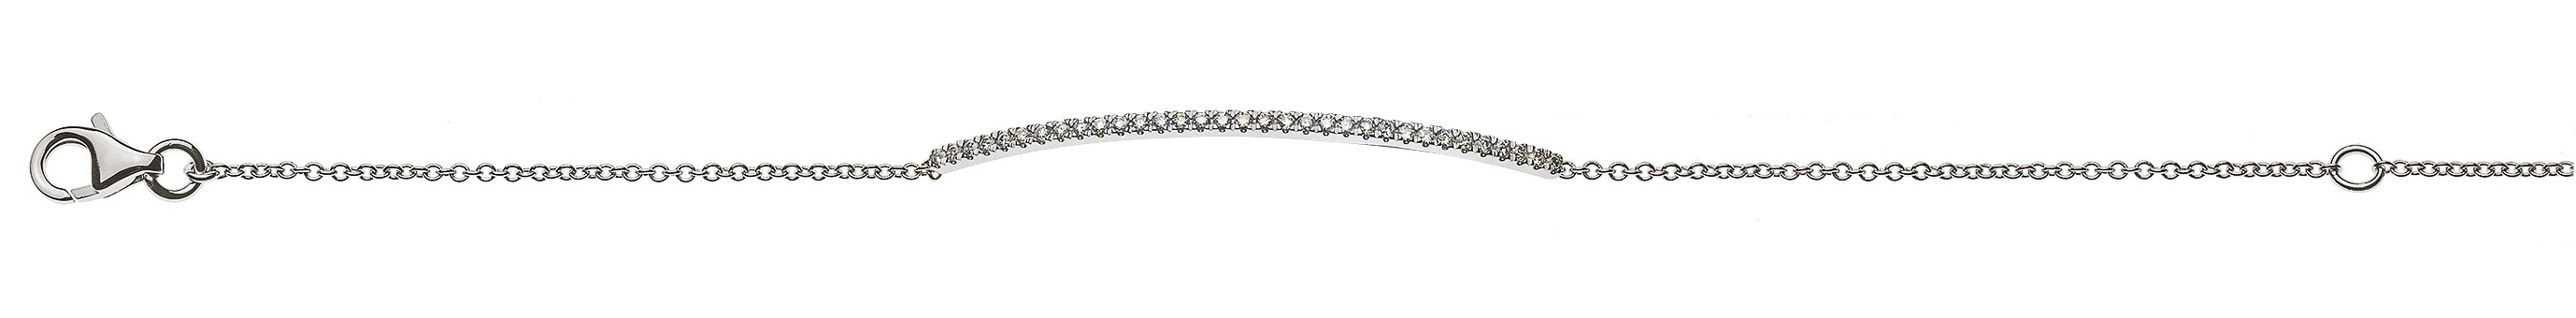 AURONOS Prestige Bracelet 18K White Gold 33 Diamonds 0.19ct 19cm